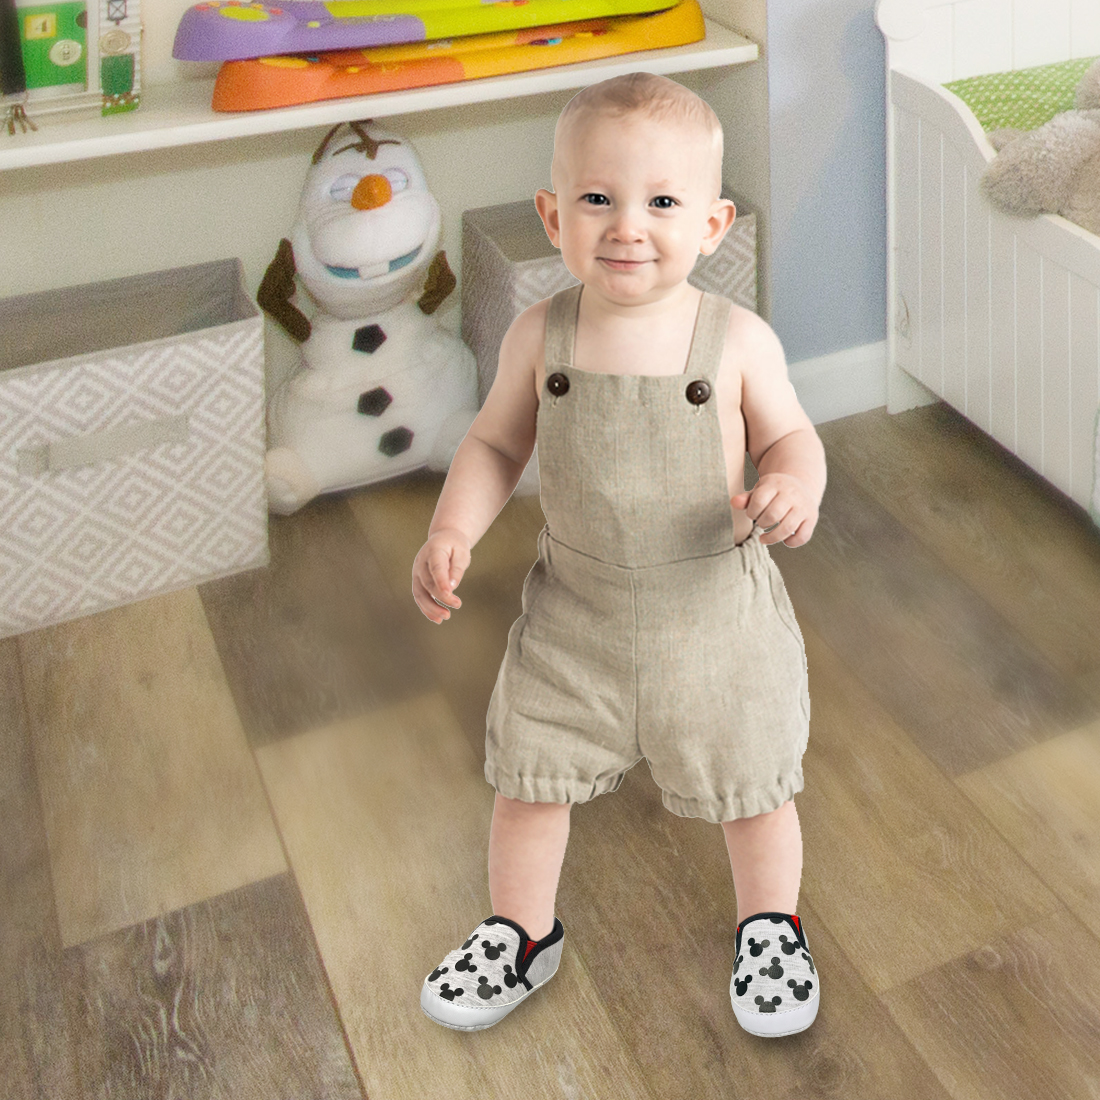 Disney Mickey Mouse Black Infant Prewalker Soft Sole Slip-on Shoes - Size 6-9 Months - image 4 of 6